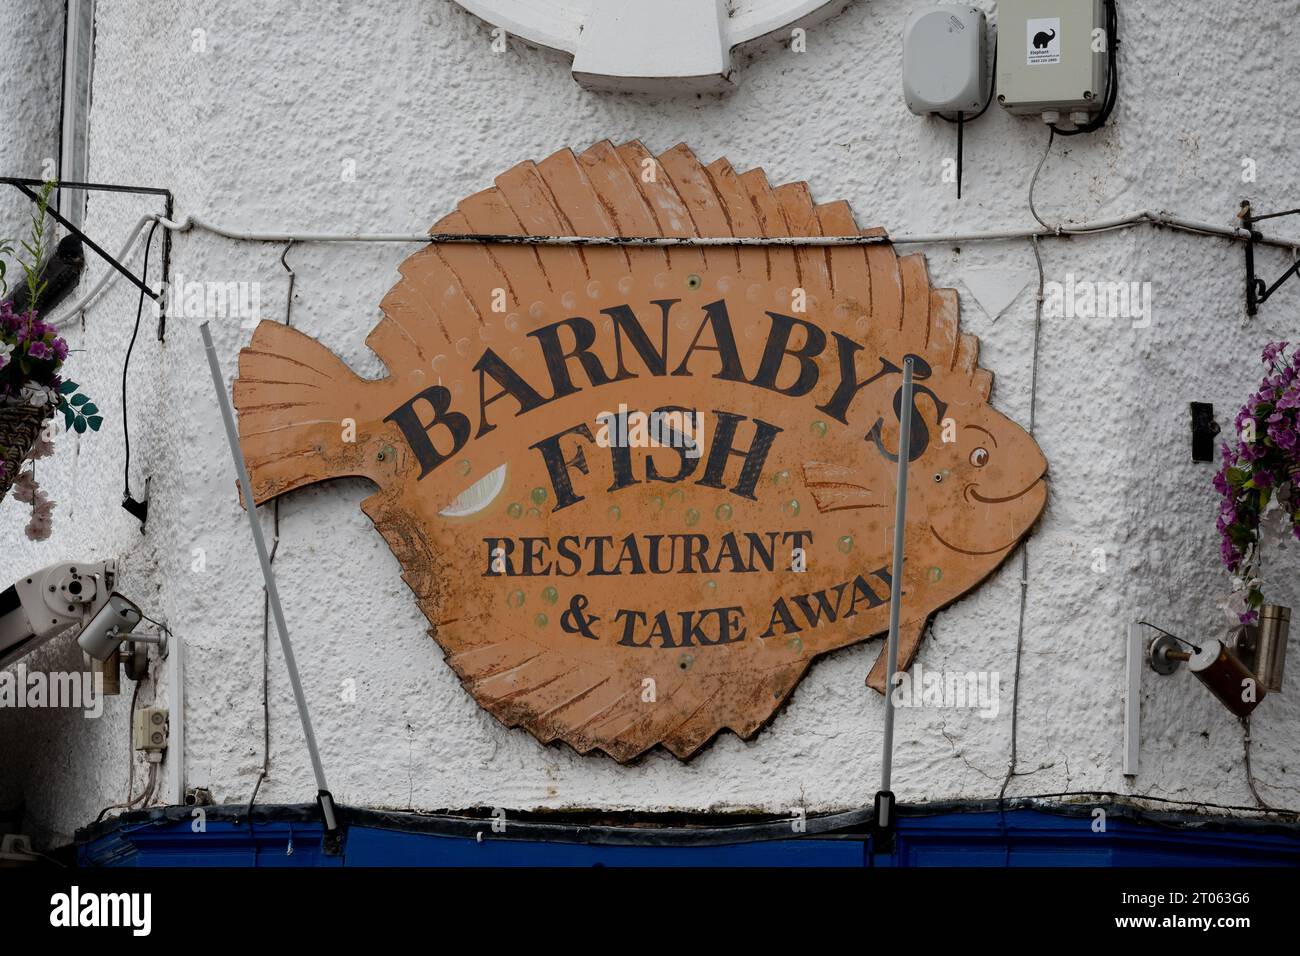 Barnaby`s Fish Restaurant and Take Away sign, Stratford-upon-Avon, Warwickshire, England, UK Stock Photo